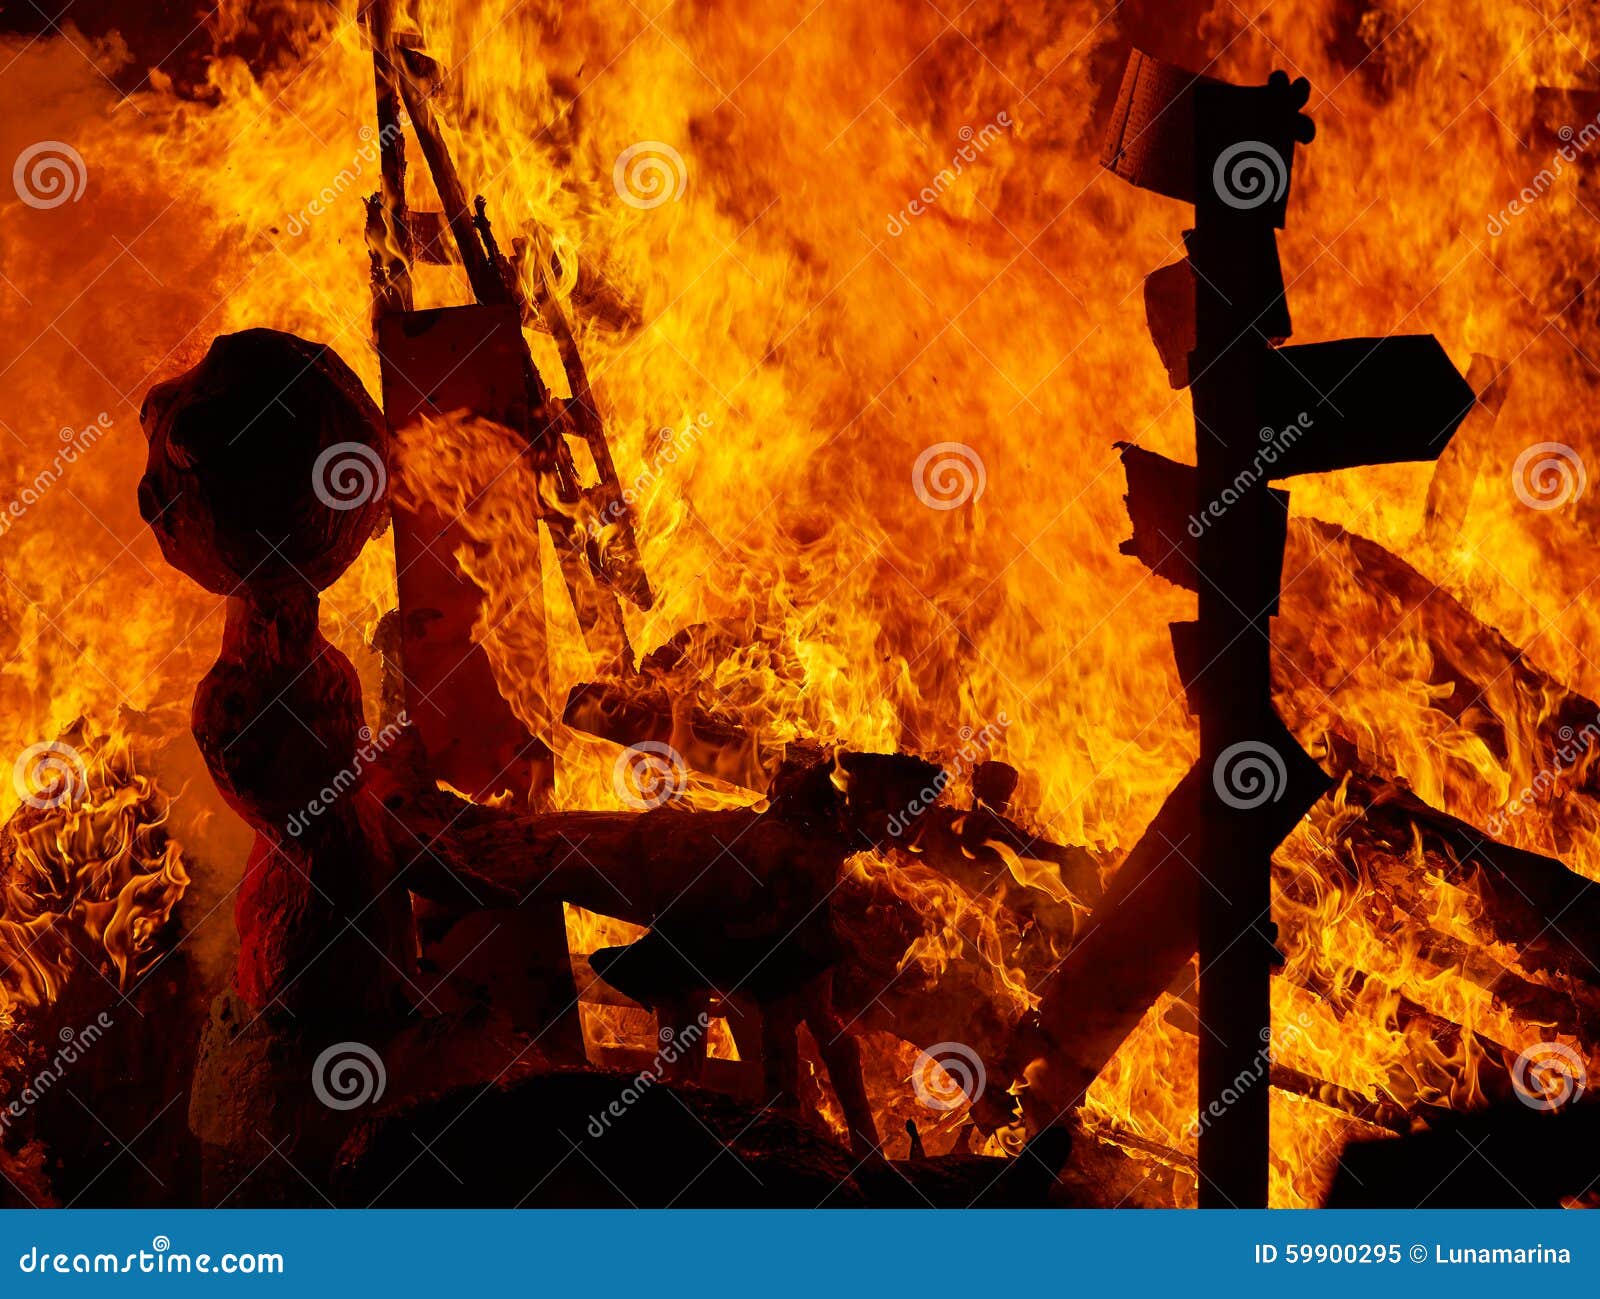 fallas fire burning in valencia fest at march 19 th